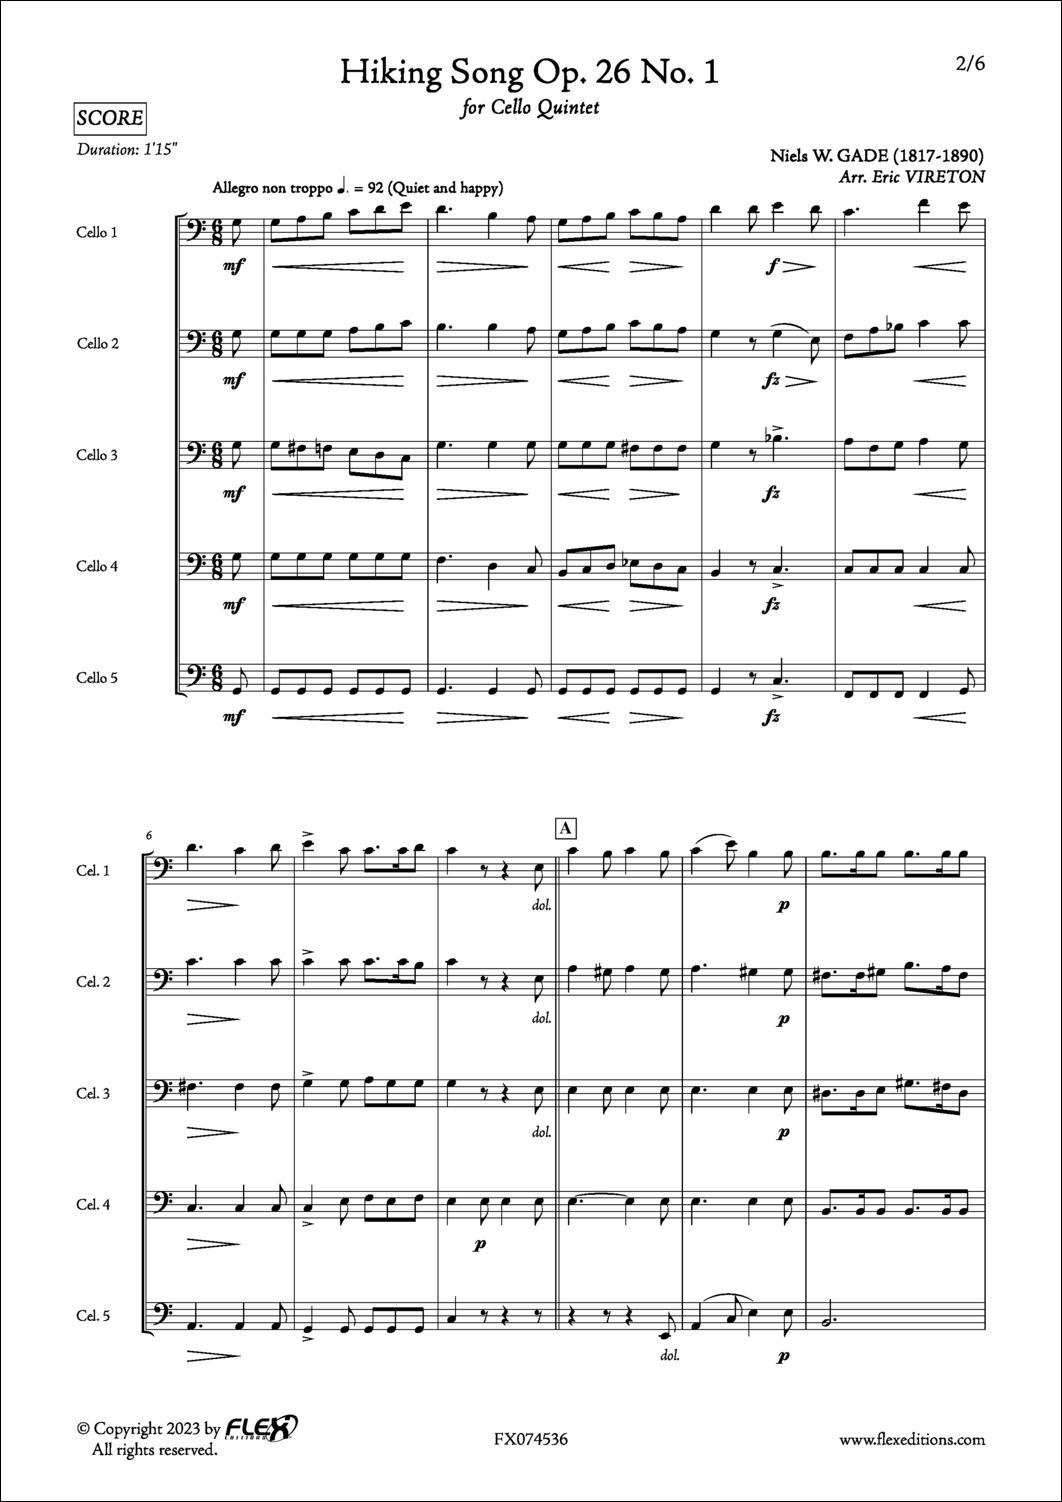 Hiking Song Op. 26 No. 1 - N. GADE - <font color=#666666>Cello Quintet</font>